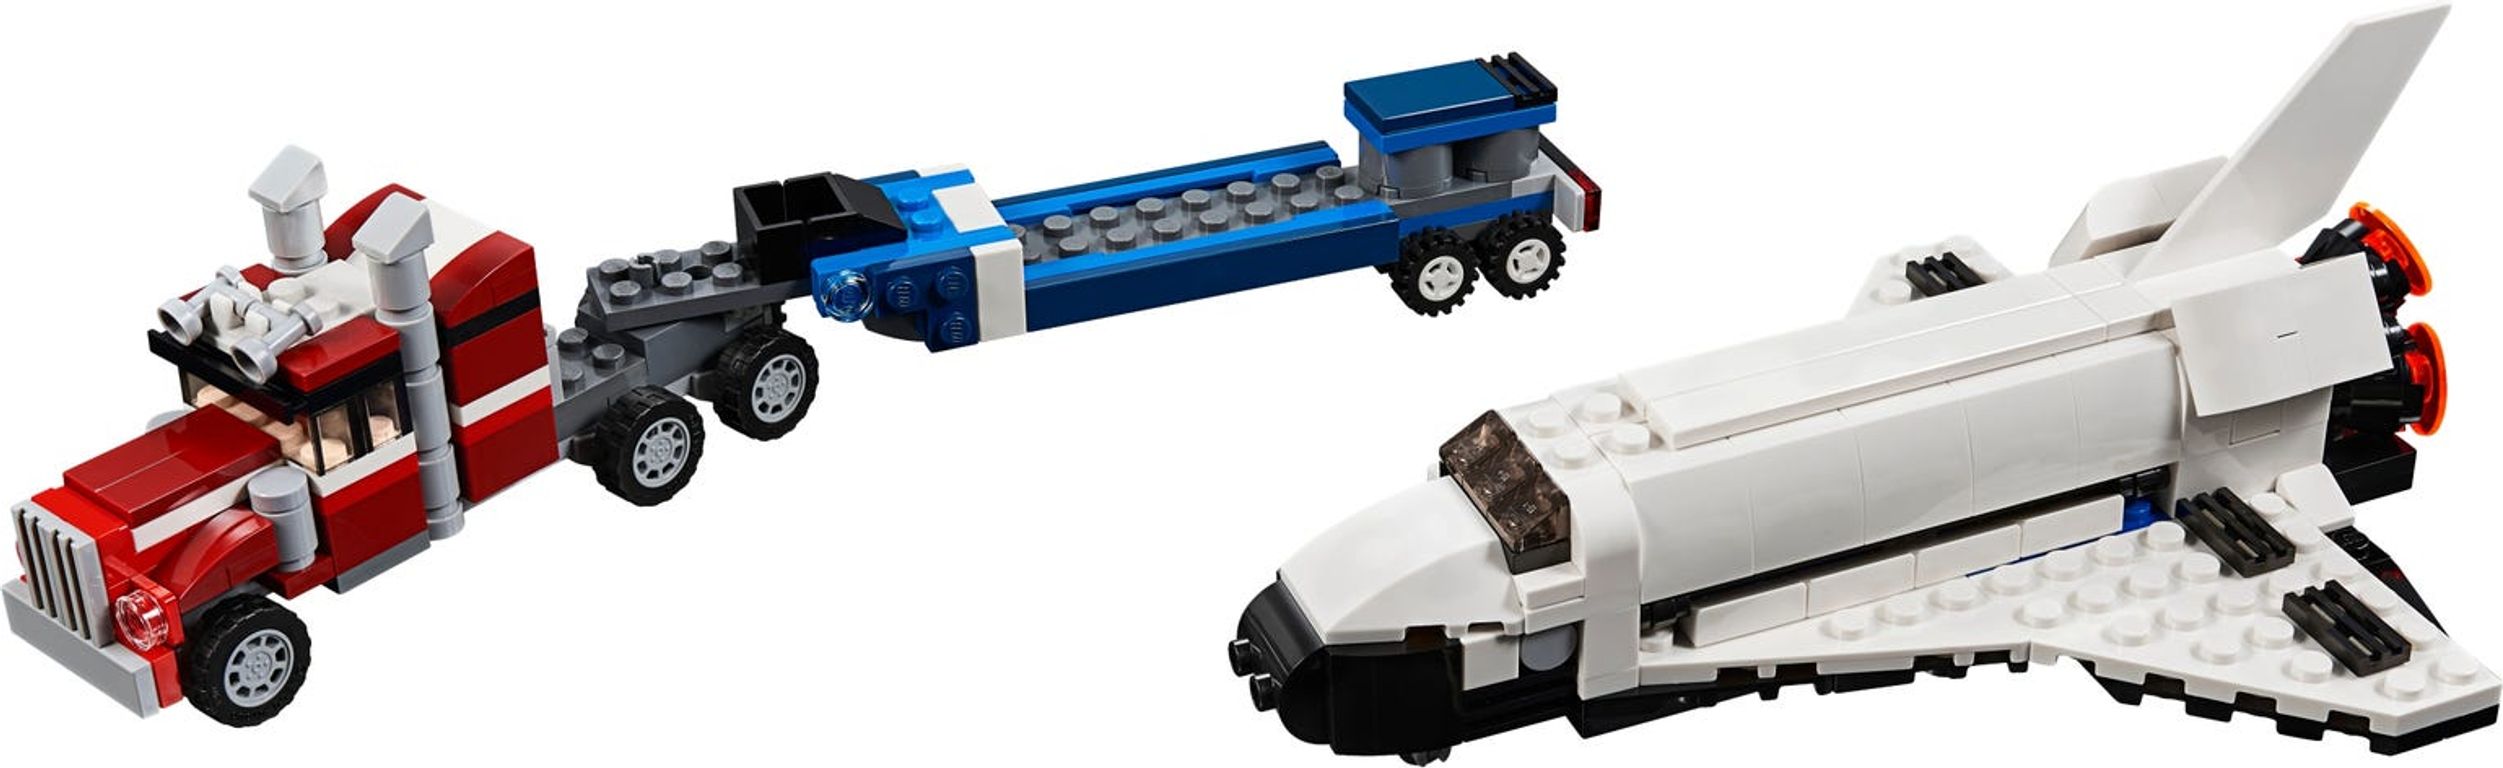 LEGO® Creator Shuttle Transporter components